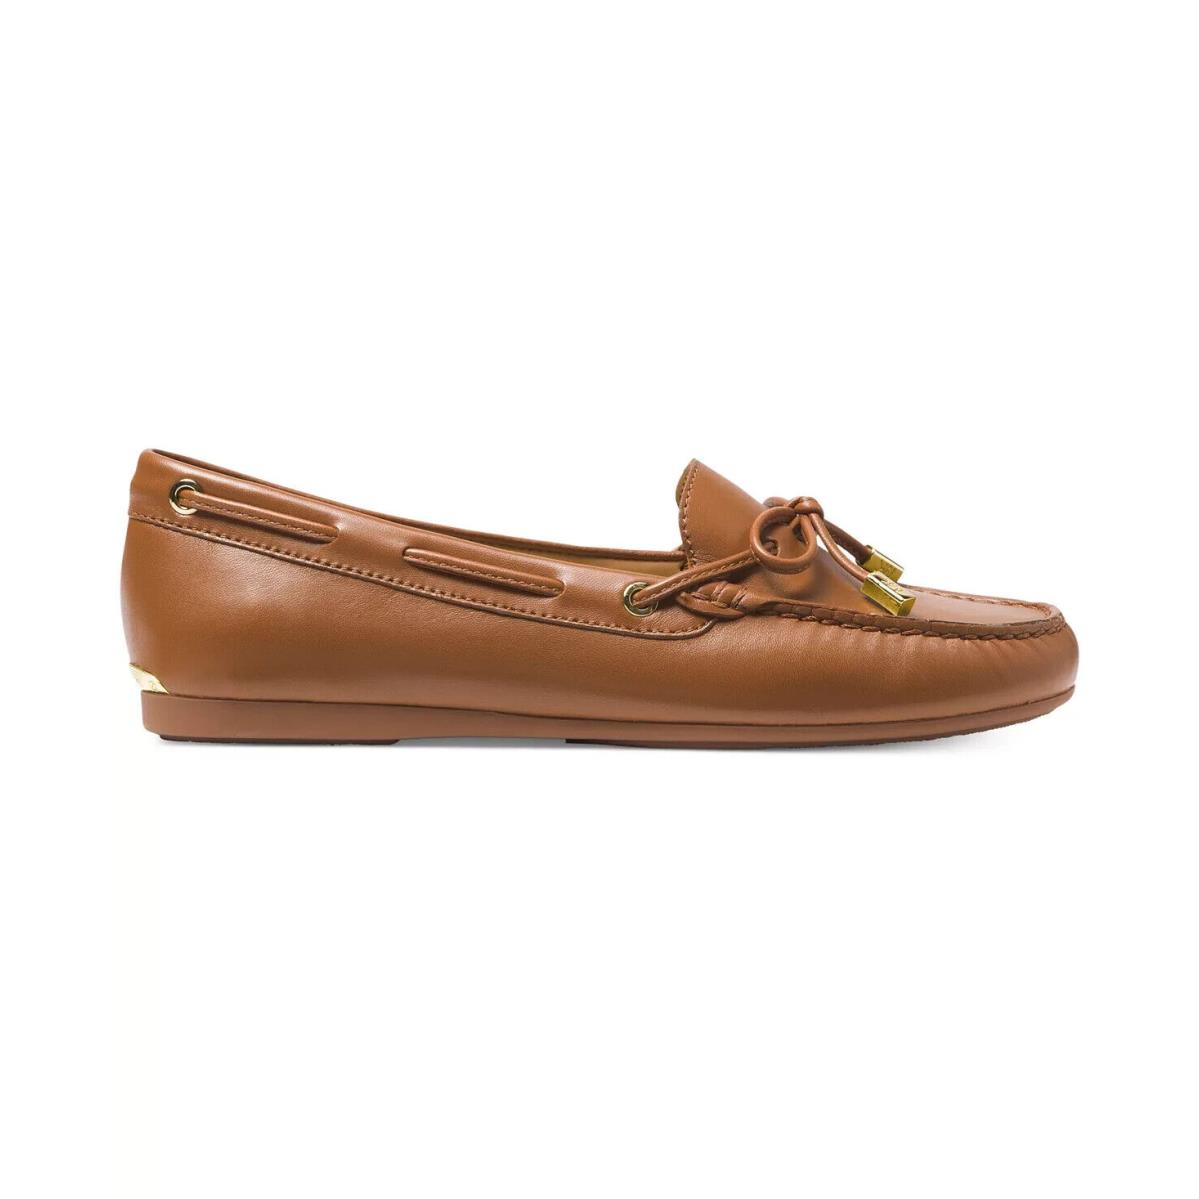 Michael Kors Sutton Moc Soft Leather Women`s Flat Loafers Brown Shoes SZ 10